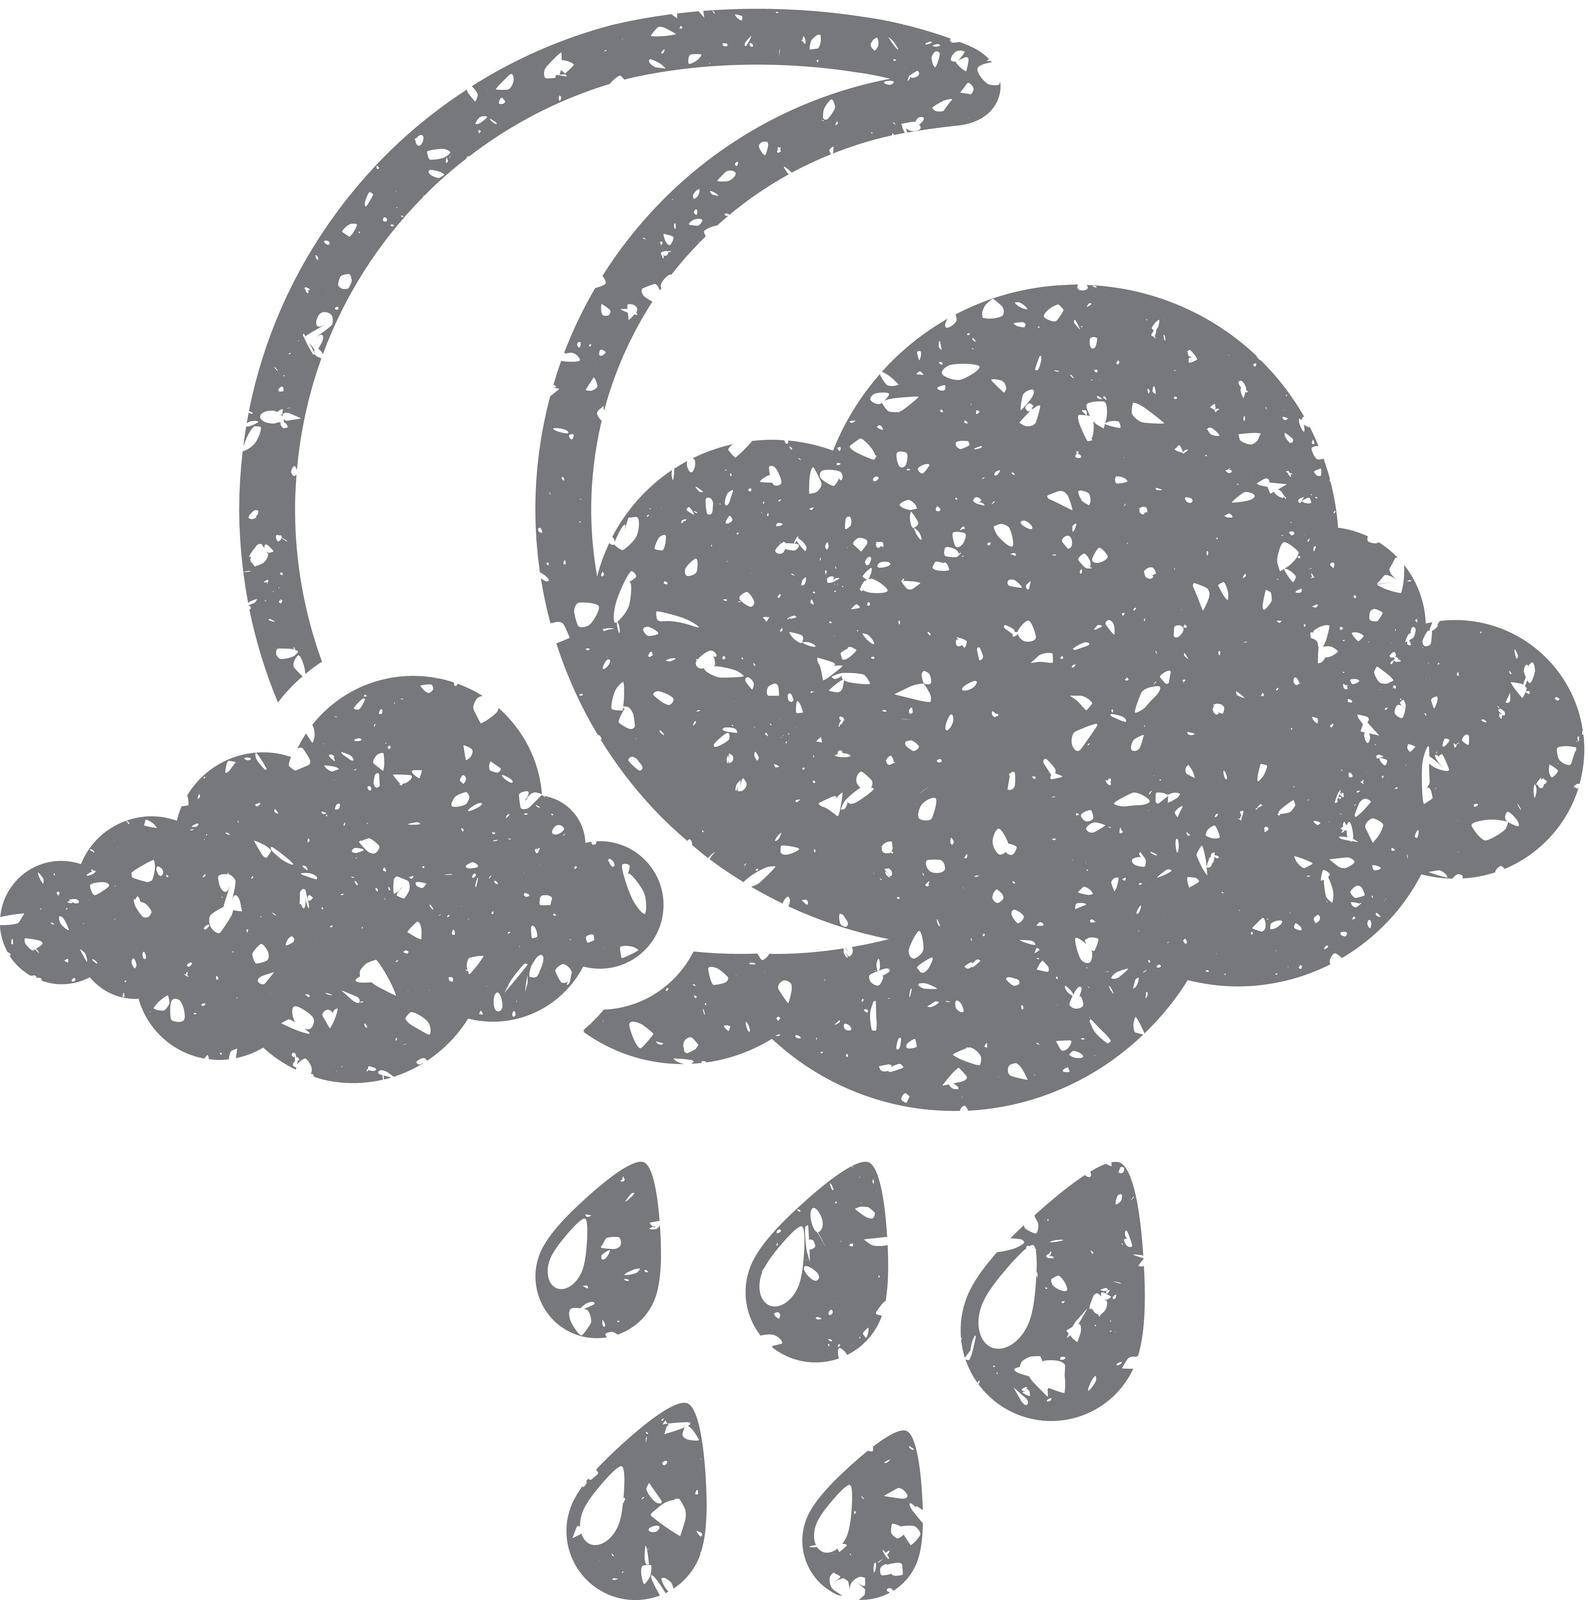 Weather overcast rainy icon in grunge texture. Vintage style vector illustration.